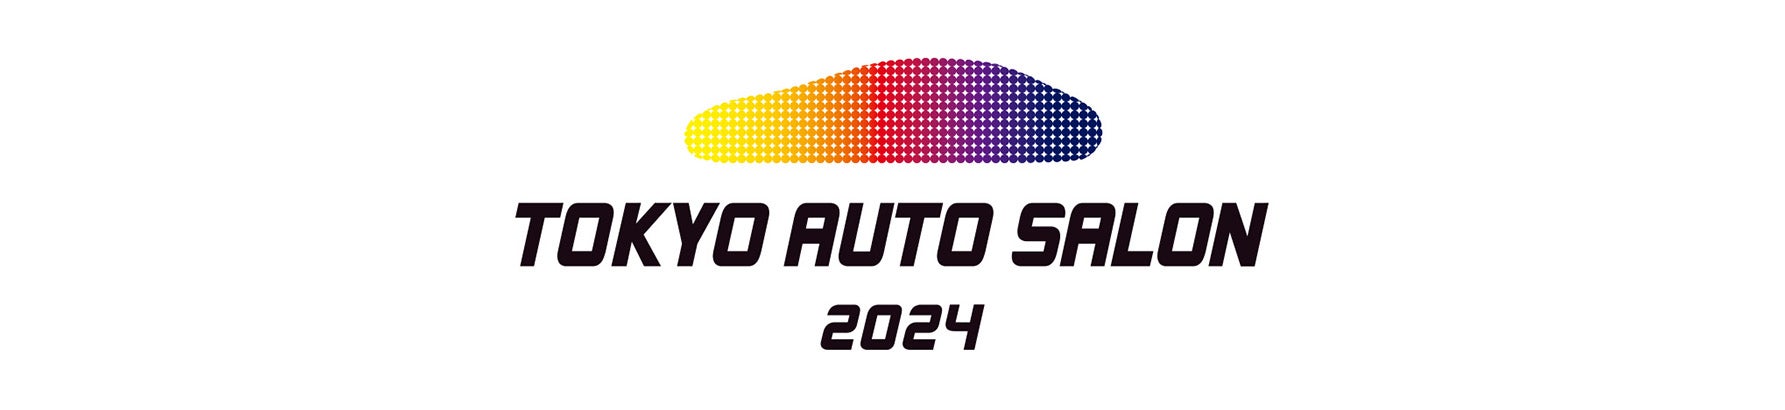 「TOKYO AUTO SALON2024」のロゴデザイン。